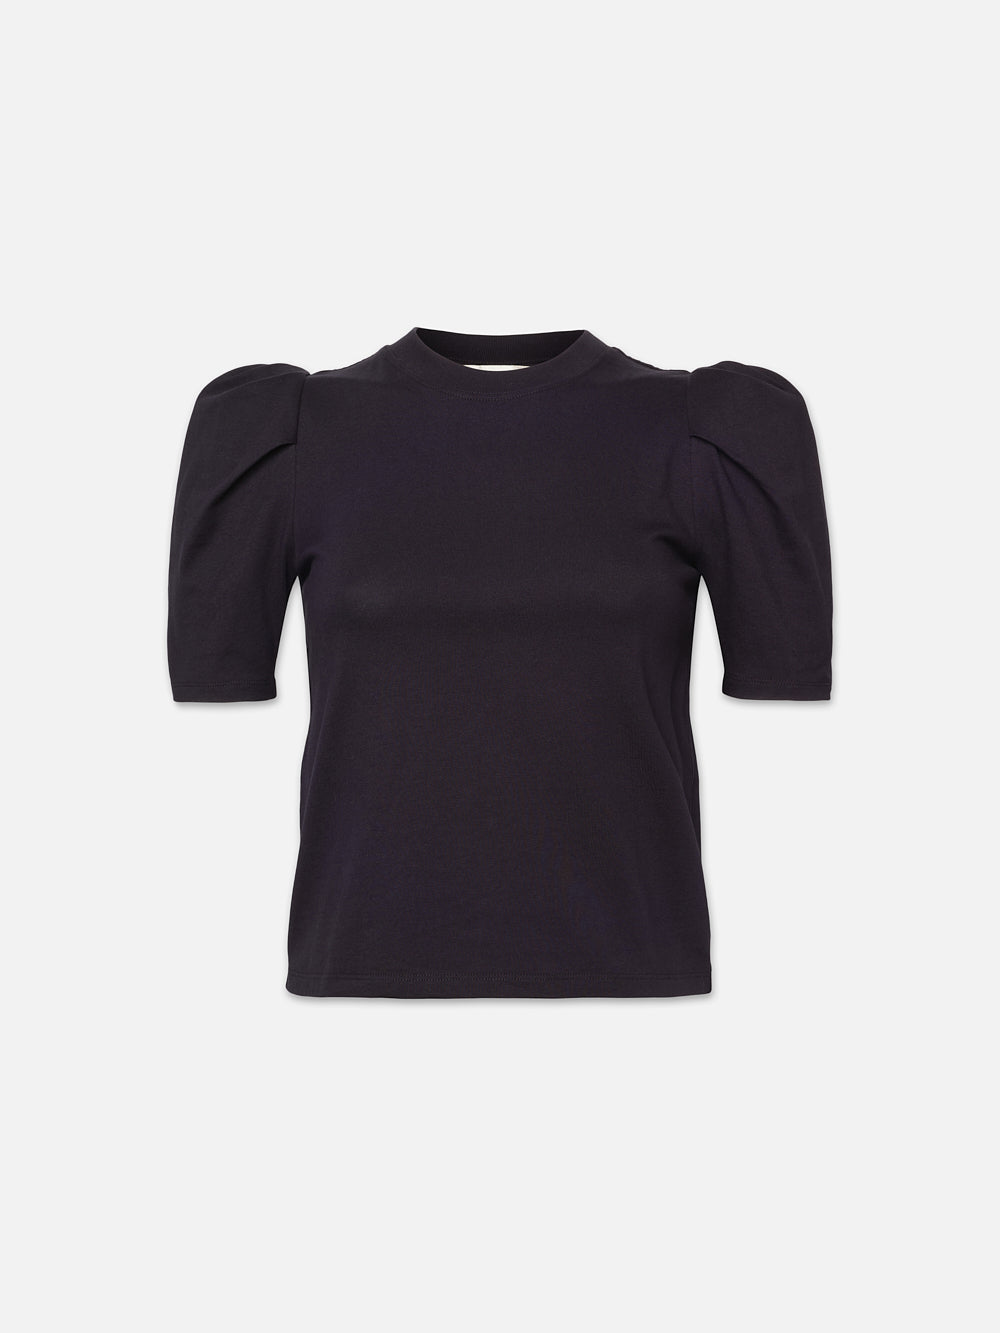 Freedom Knitwear Built-In Bra Shirt - Black XS in Freedom StayFresh Travel  Loungewear, Pajamas for Women